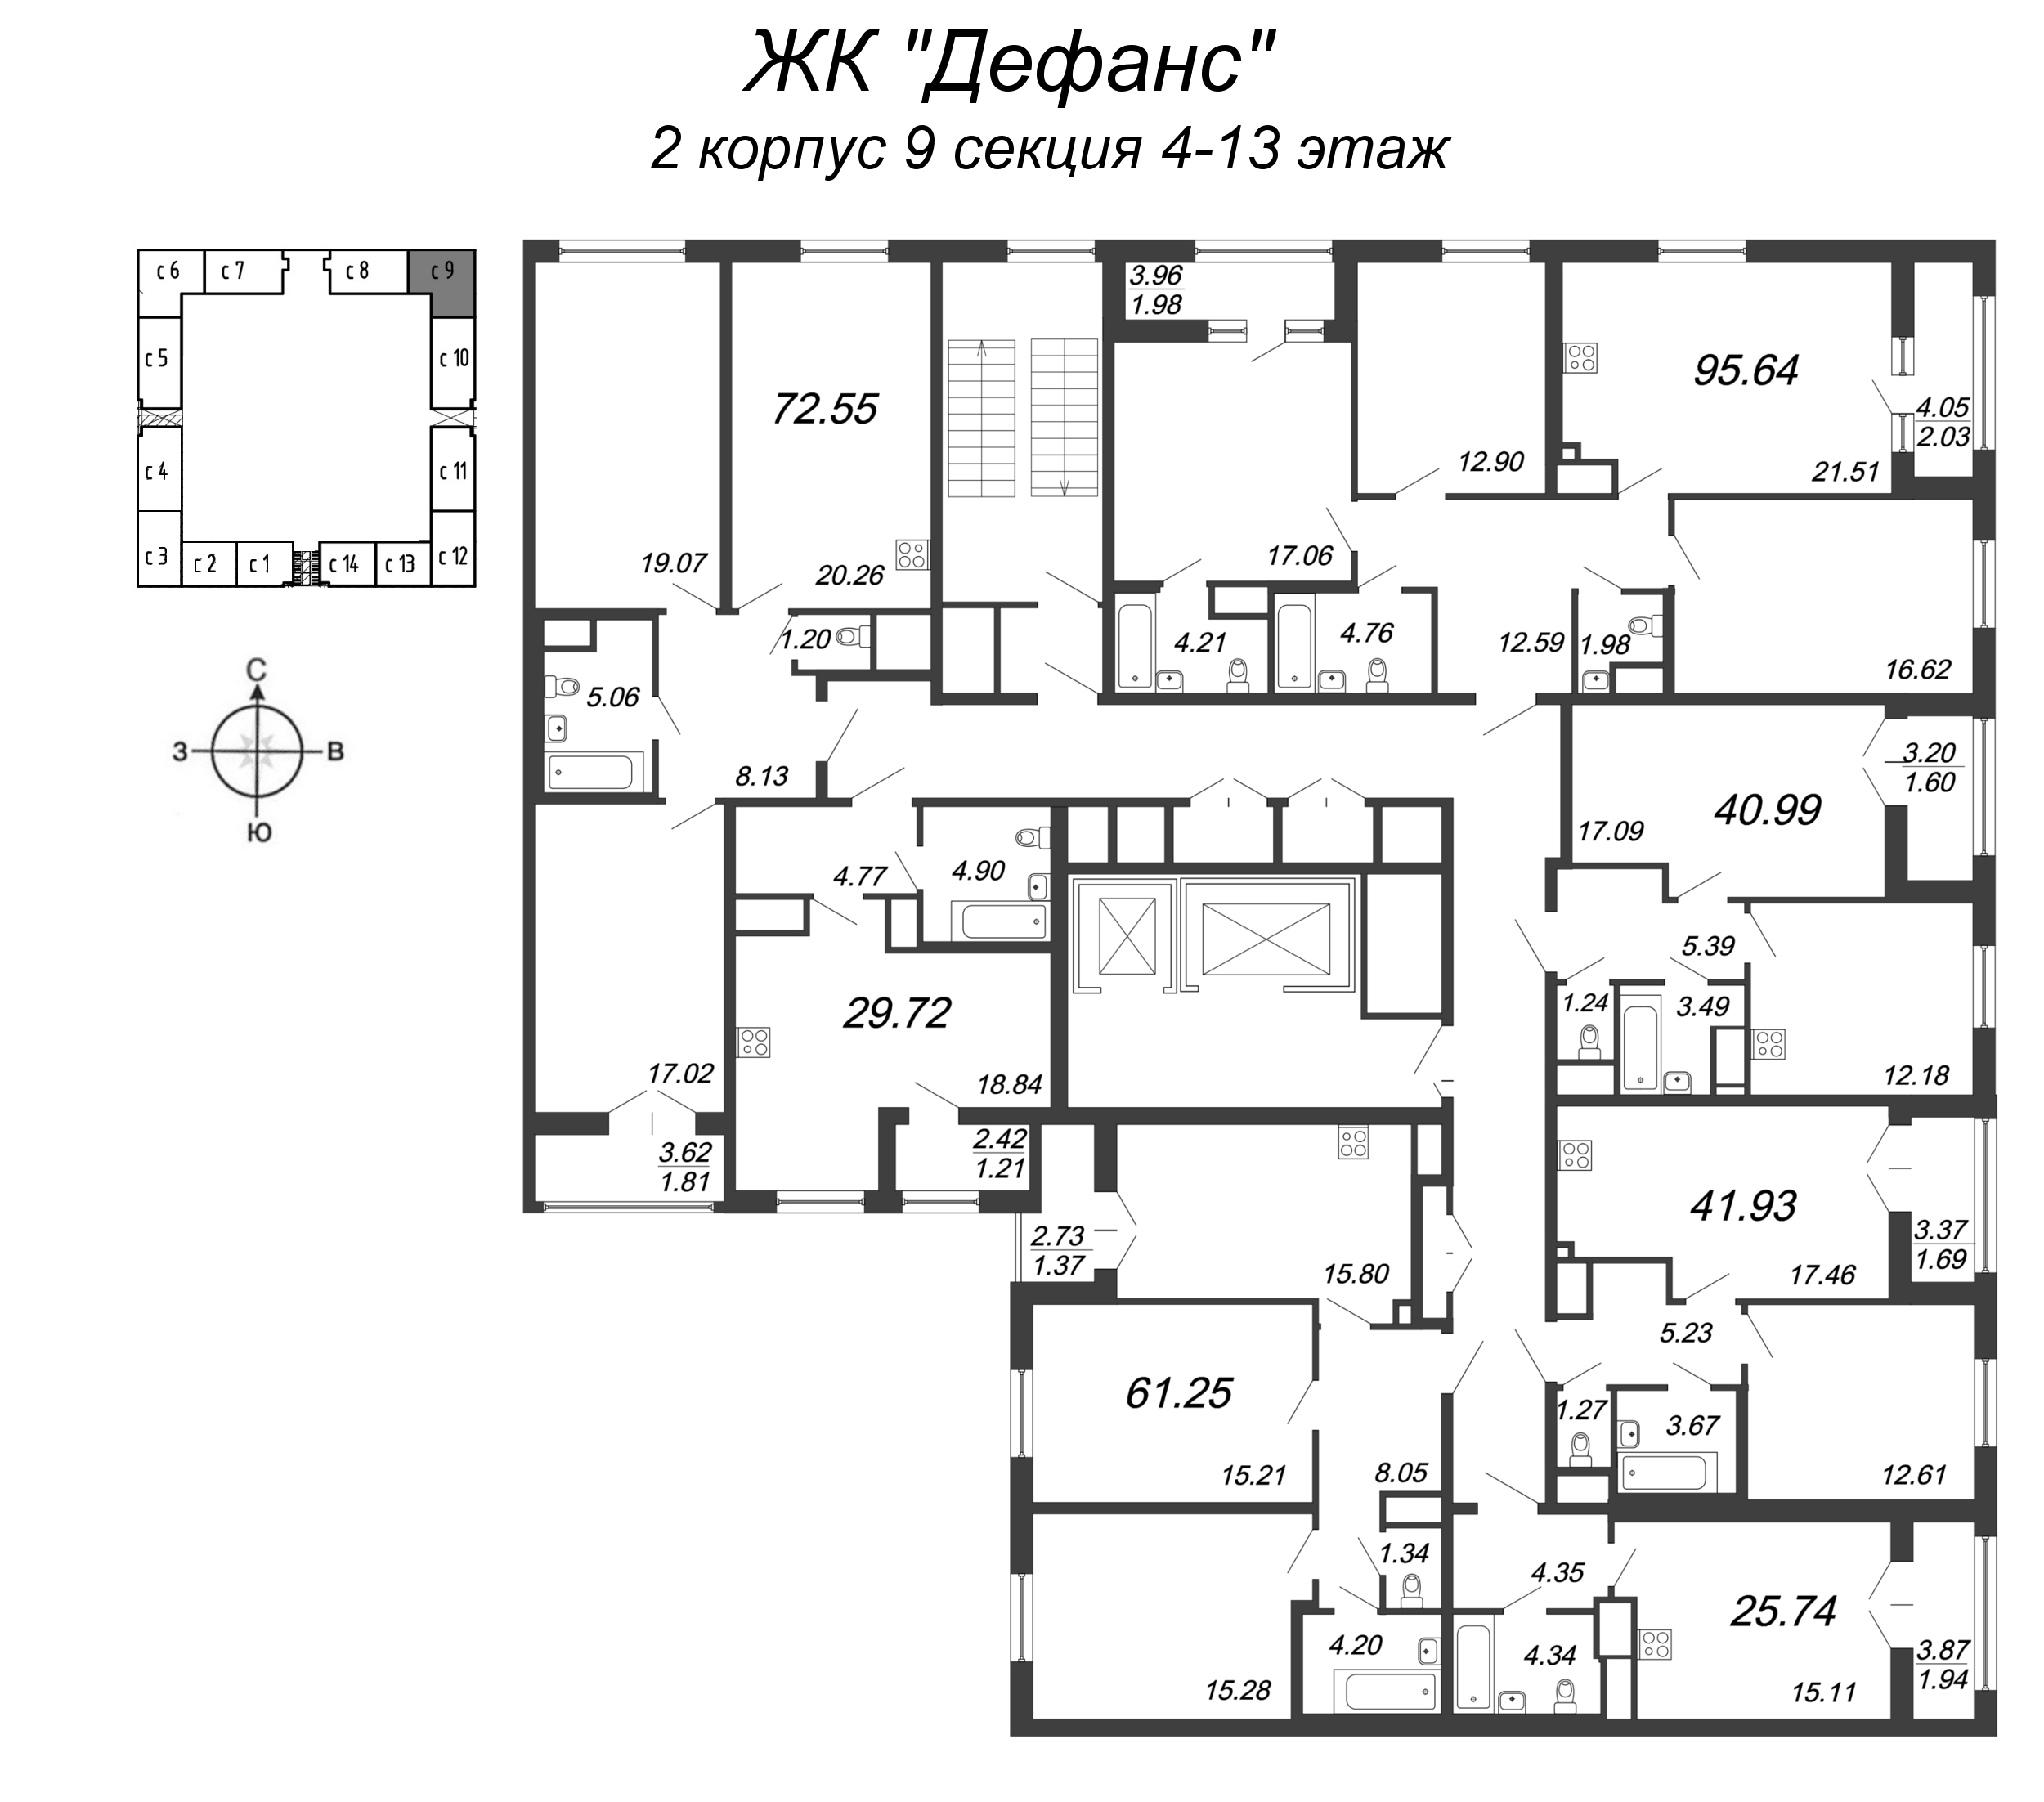 4-комнатная (Евро) квартира, 95.64 м² - планировка этажа